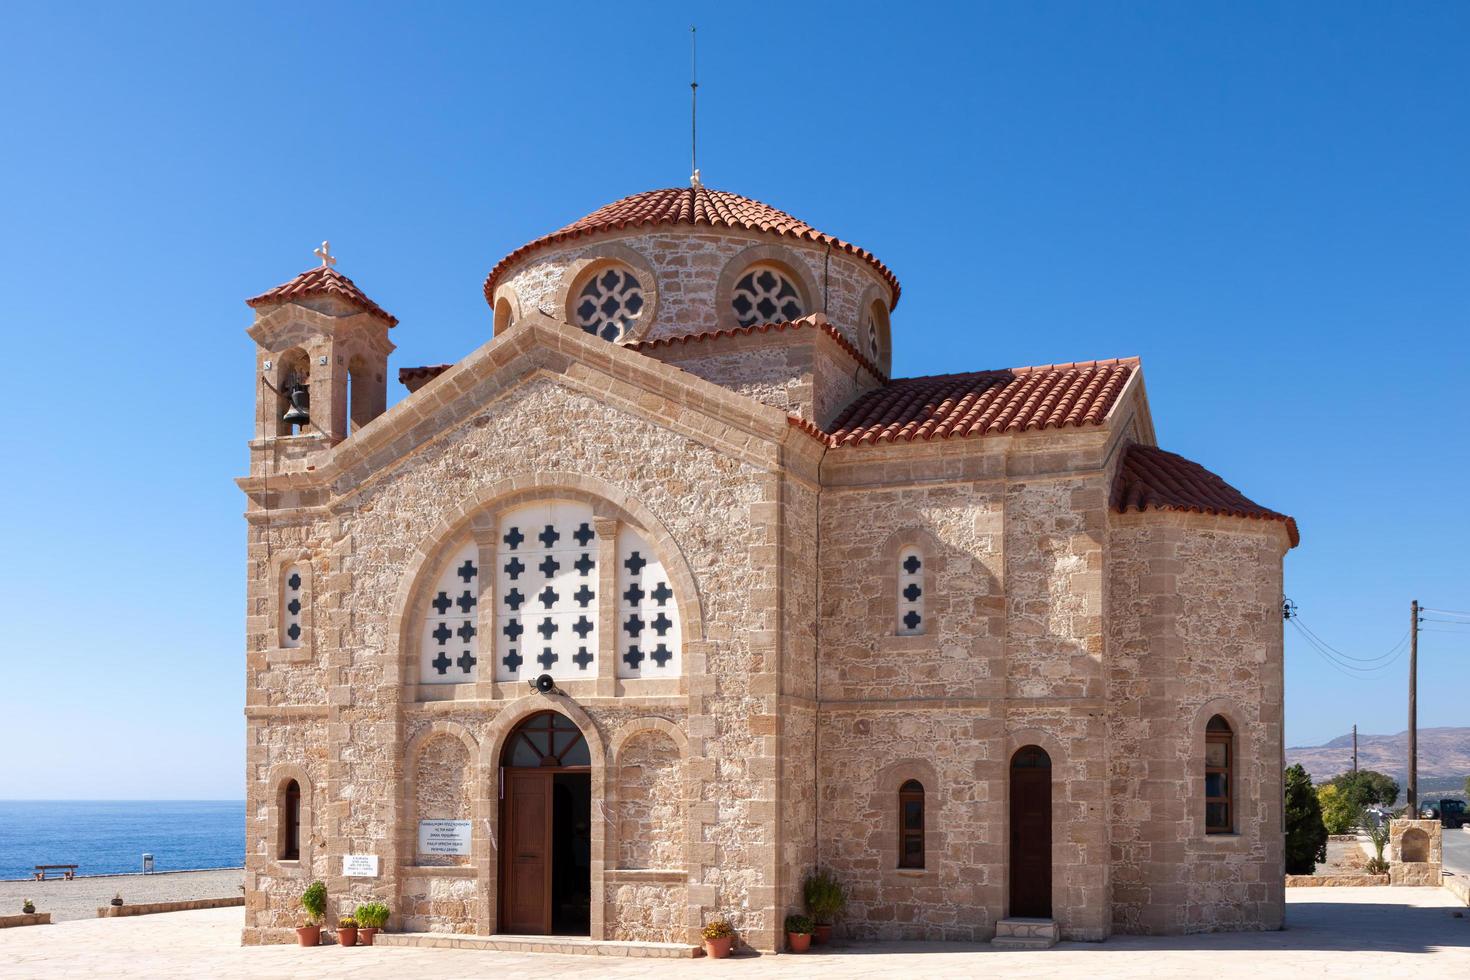 cabo deprano, chipre, grecia, 2009. iglesia de agios georgios foto